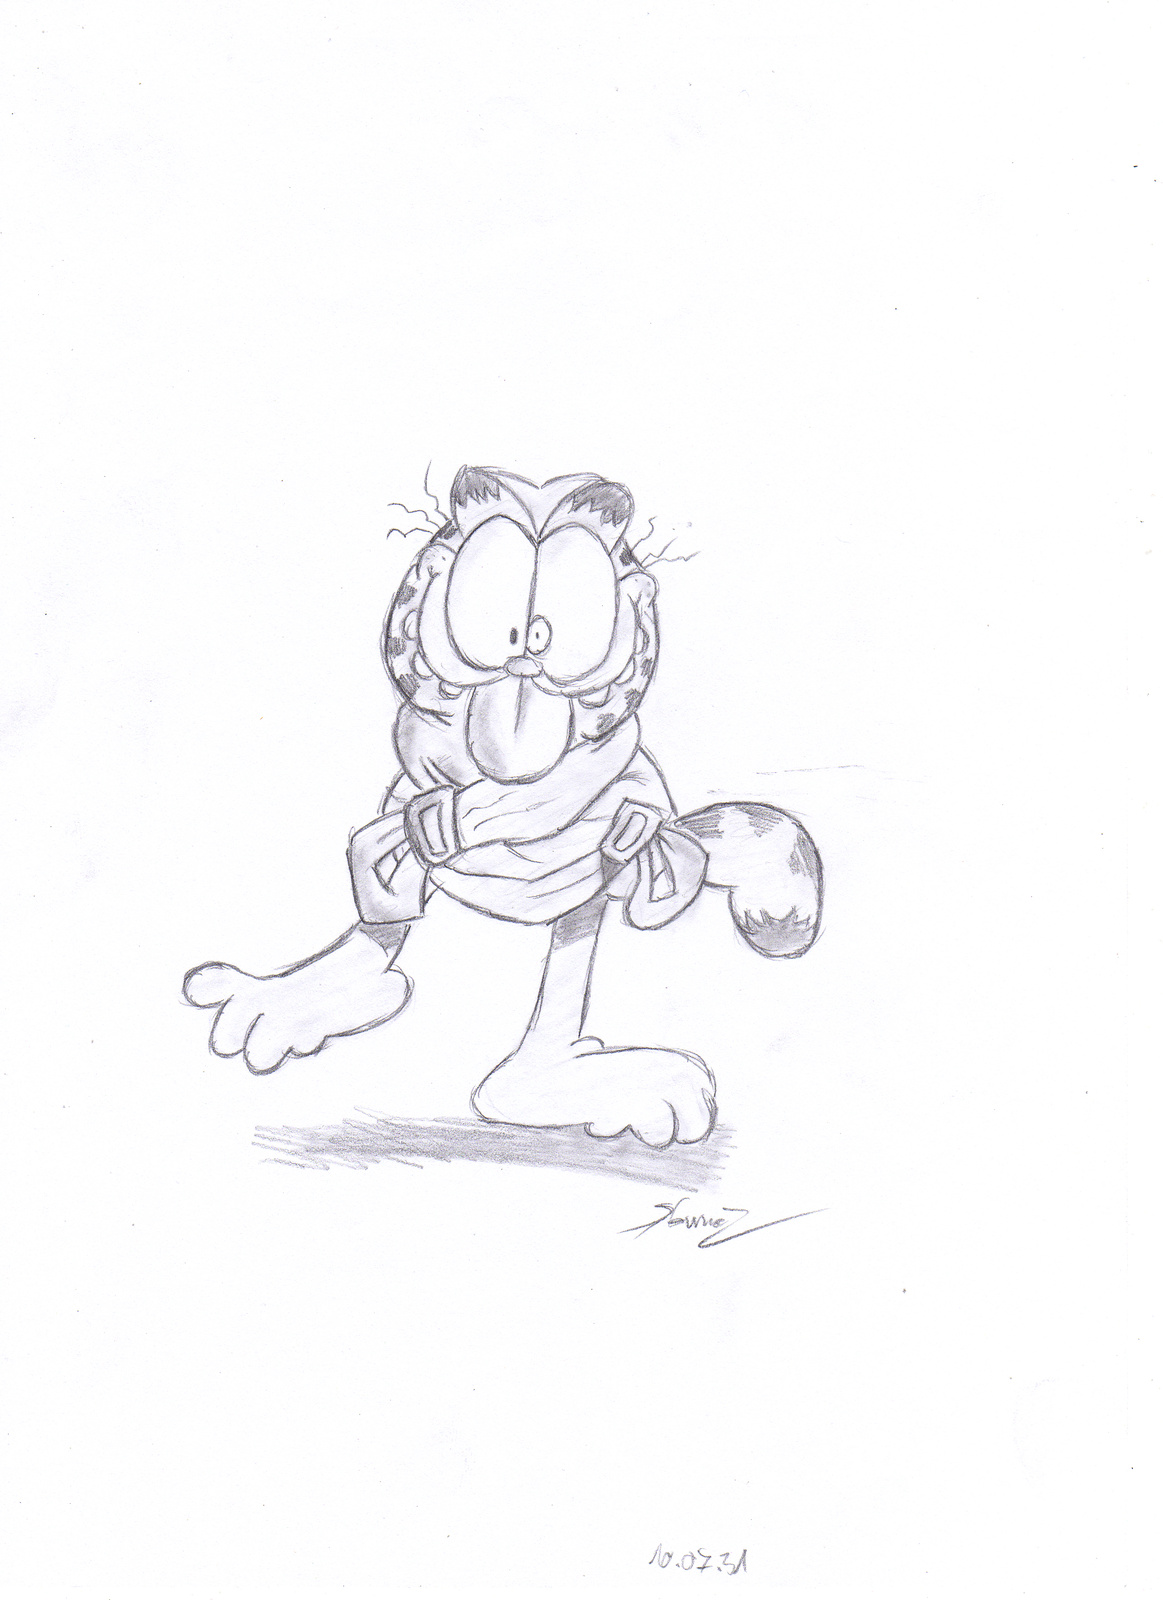 Garfield Mad